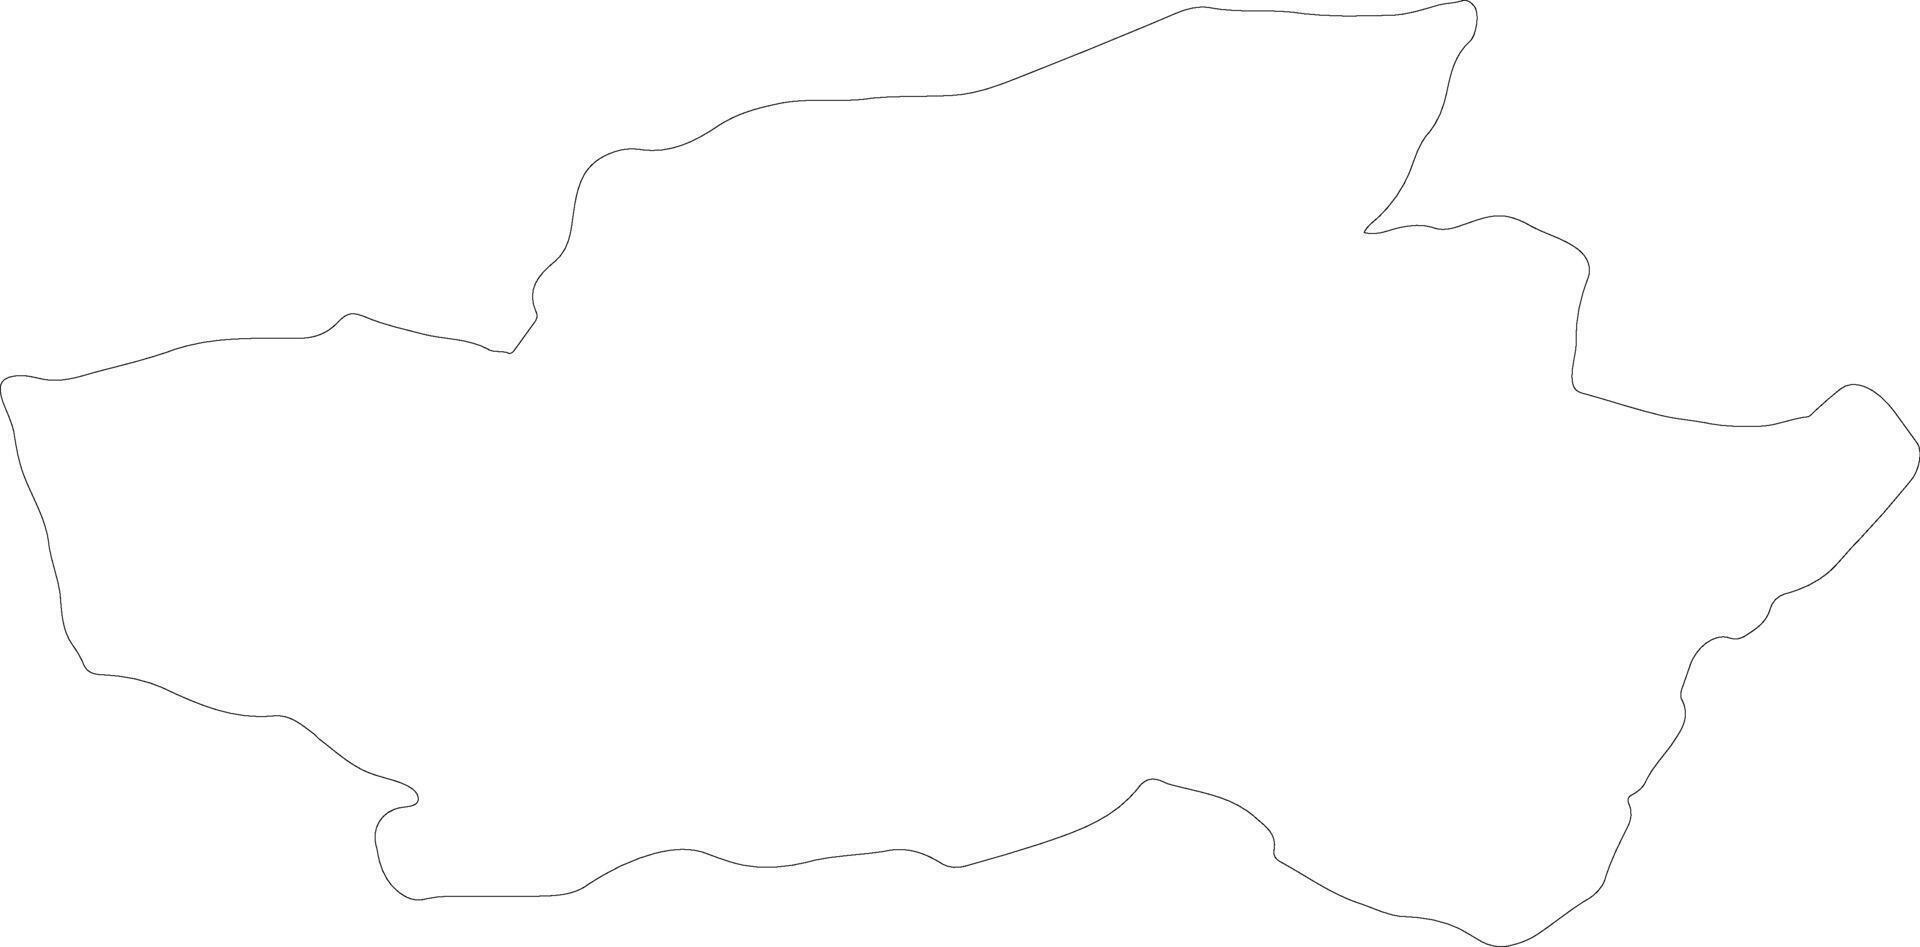 braga Portugal contorno mapa vector